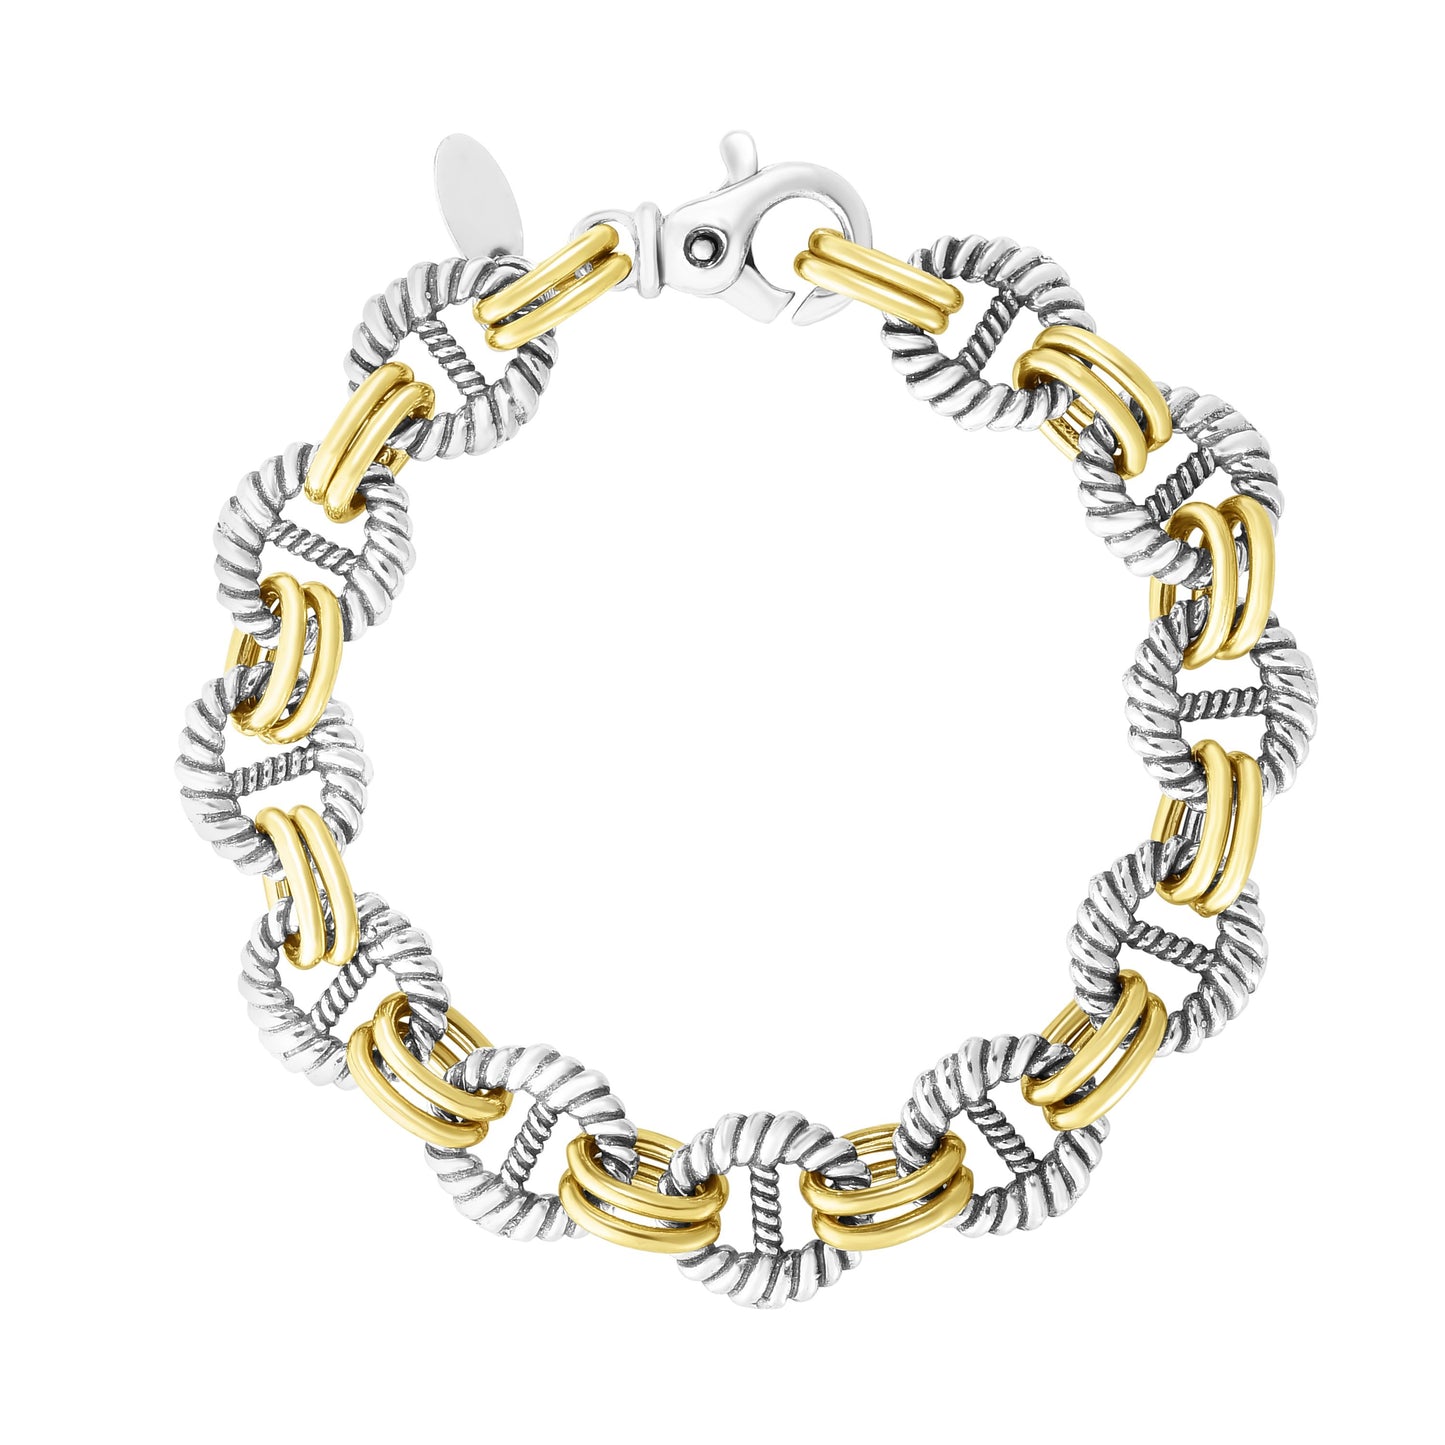 18K Gold & Sterling Silver Polished Bracelet with Lobster Clasp